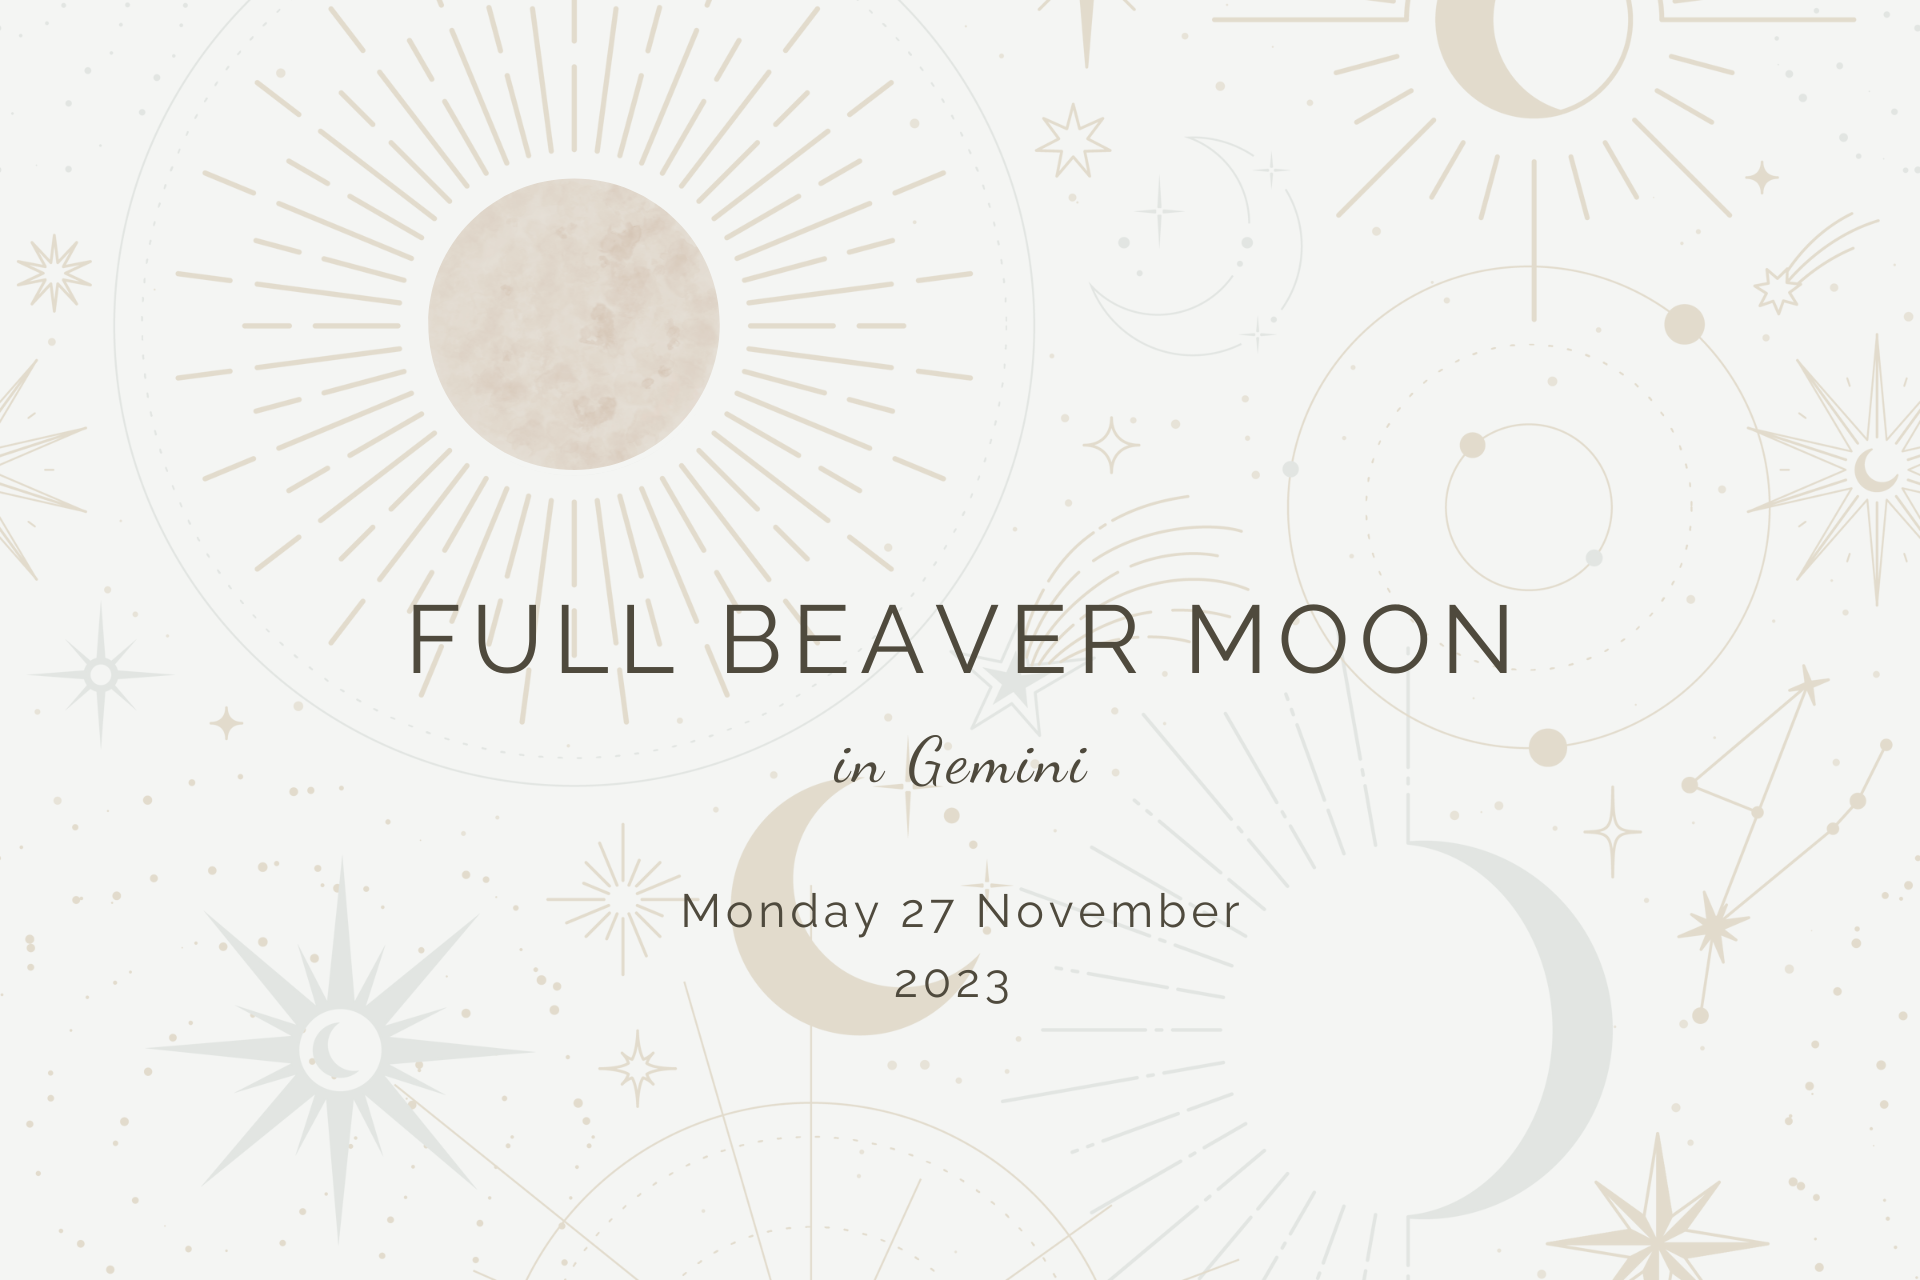 Full Beaver Moon in Gemini by Sue Cartwright, Spiral Leaf